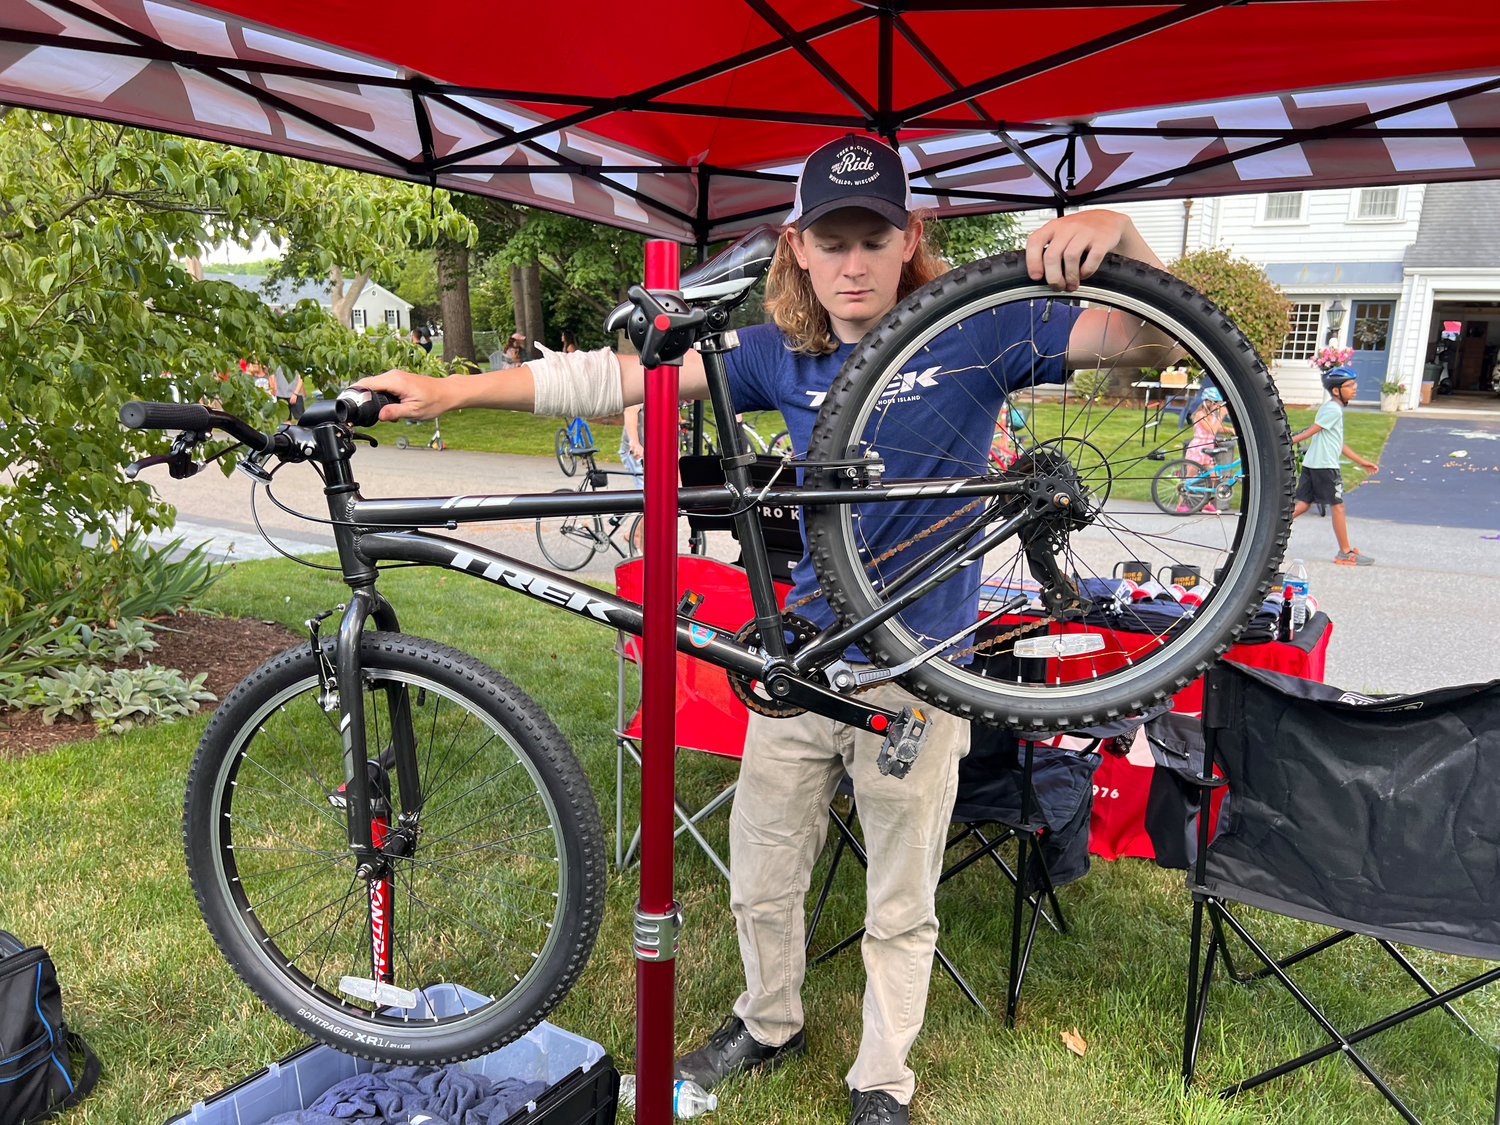 Trek bike specialist Ben O'Neil tunes up a bike in a yard on Fairway Drive. The Trek store in EP is sponsoring the Pan Mass racers.